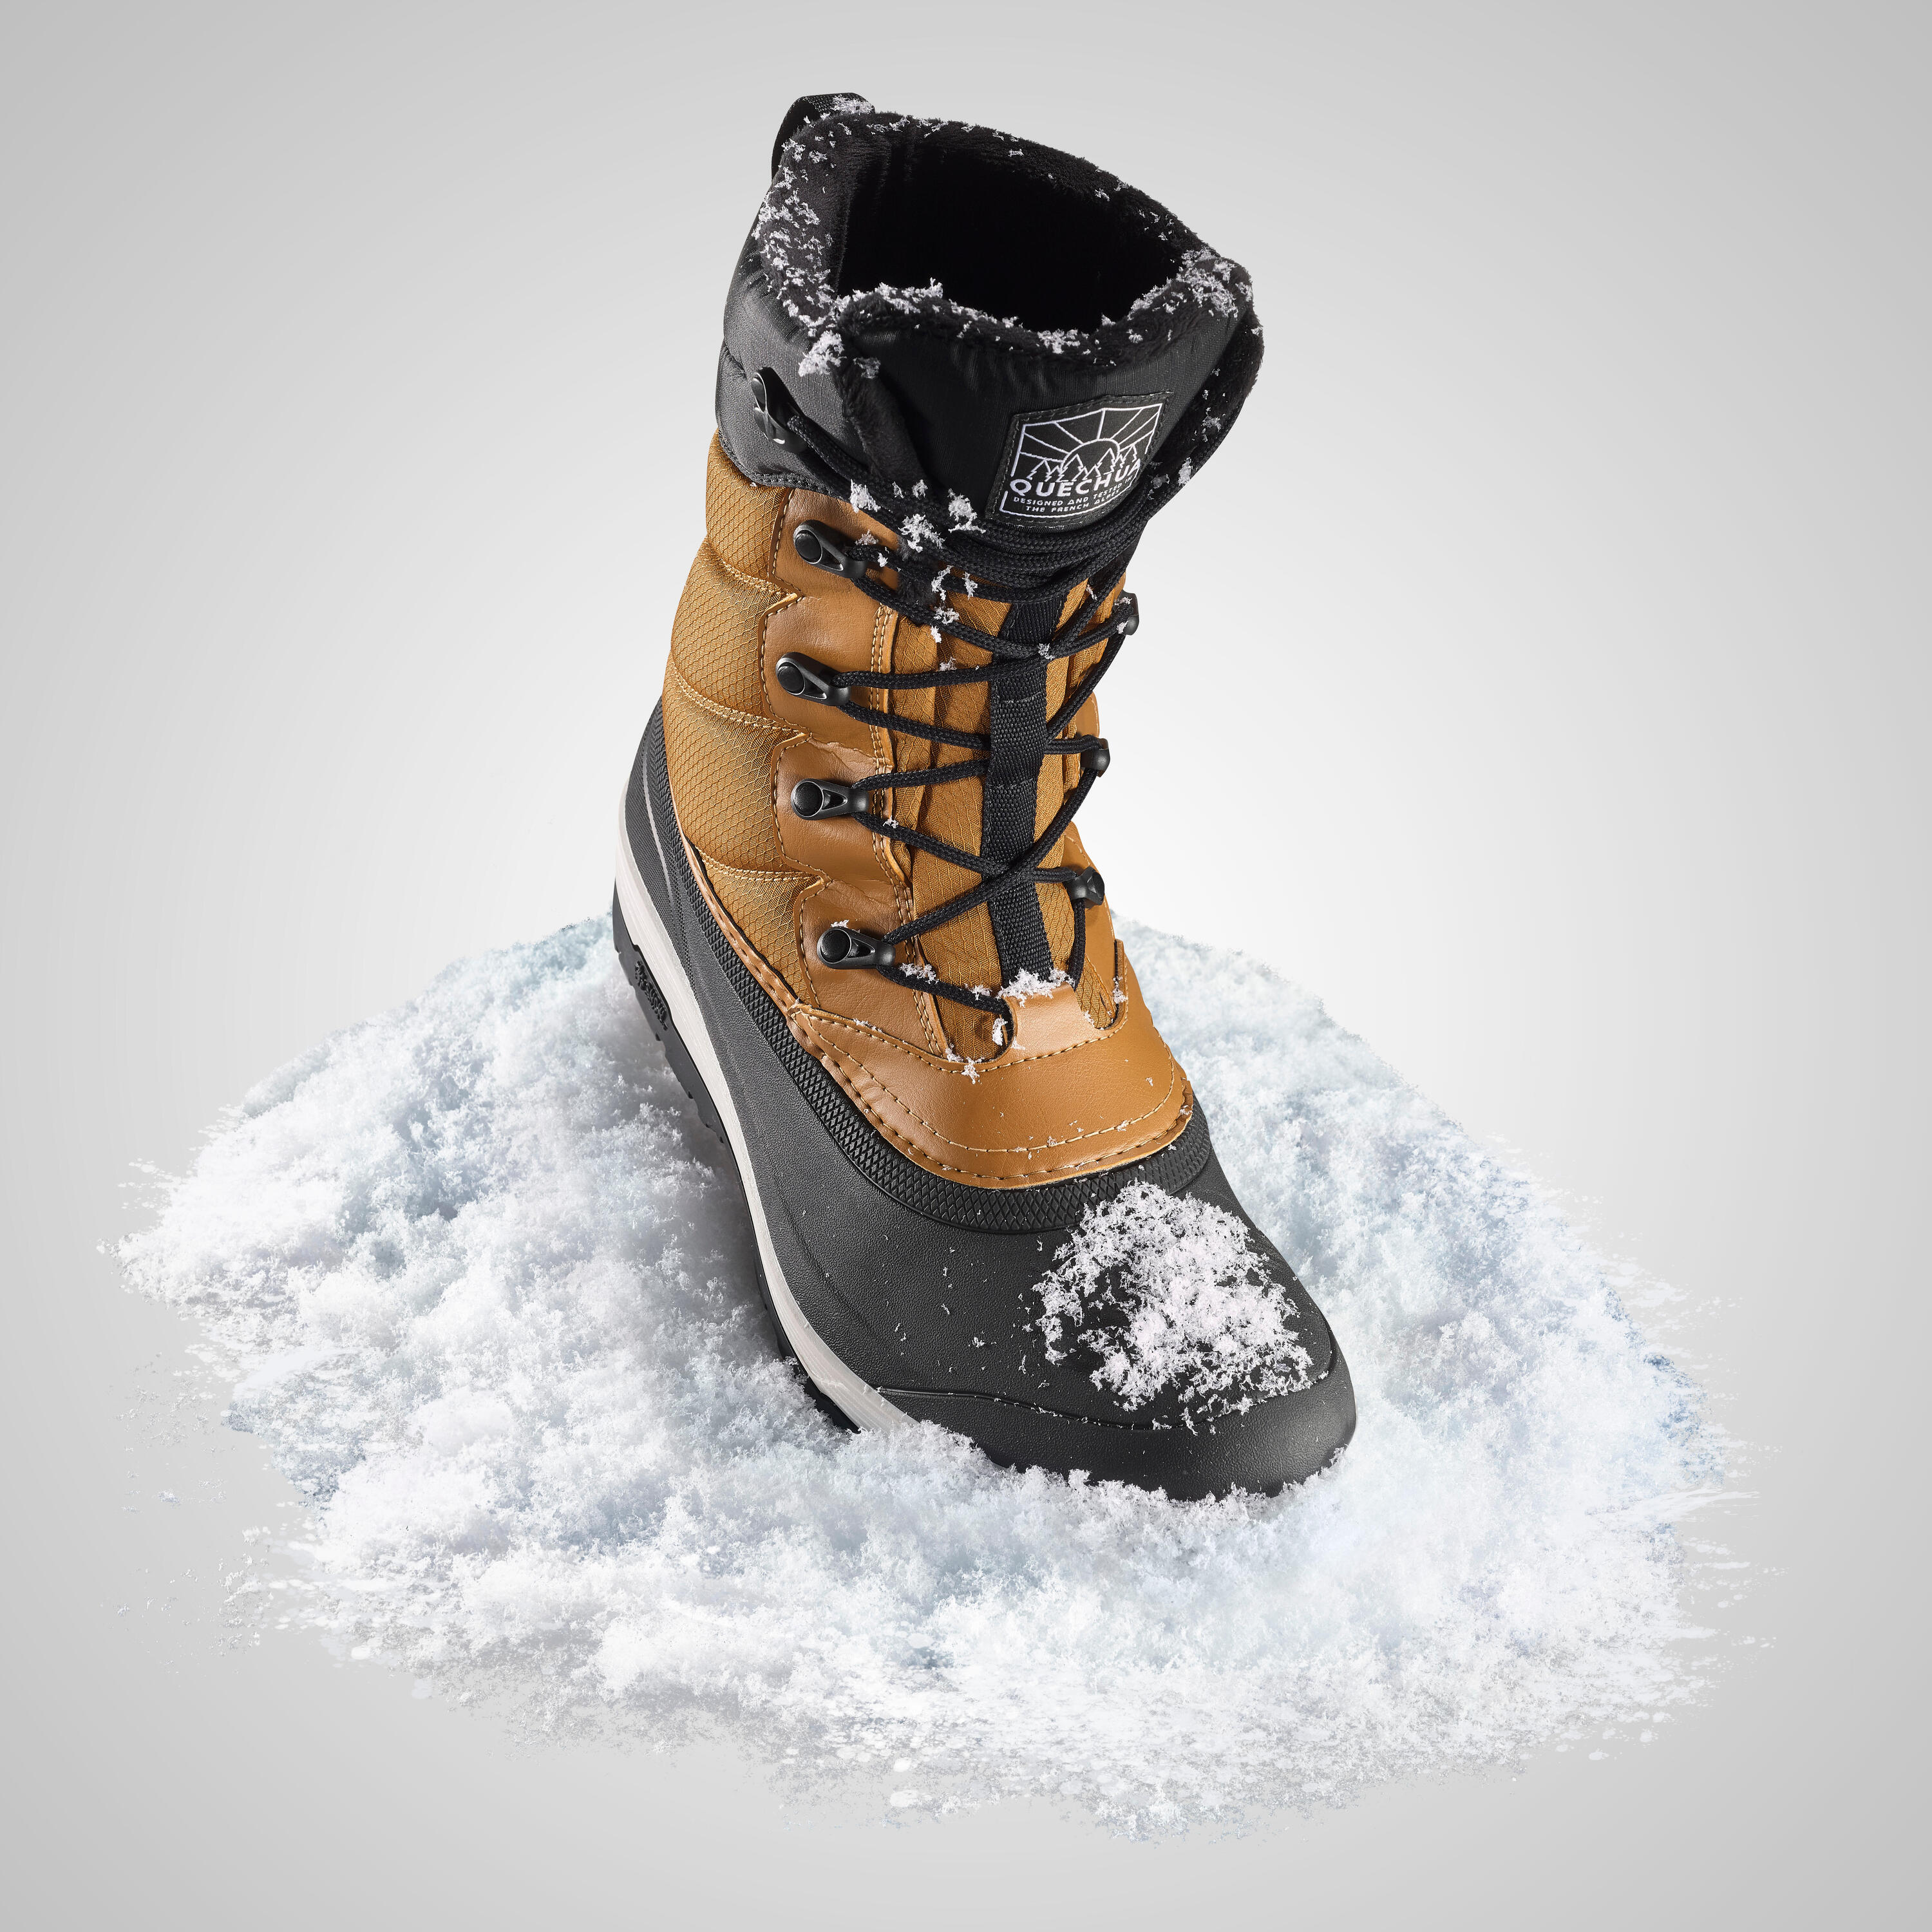 Men’s Warm Waterproof Snow Hiking Boots  - SH500 X- WARM - Lace 9/9